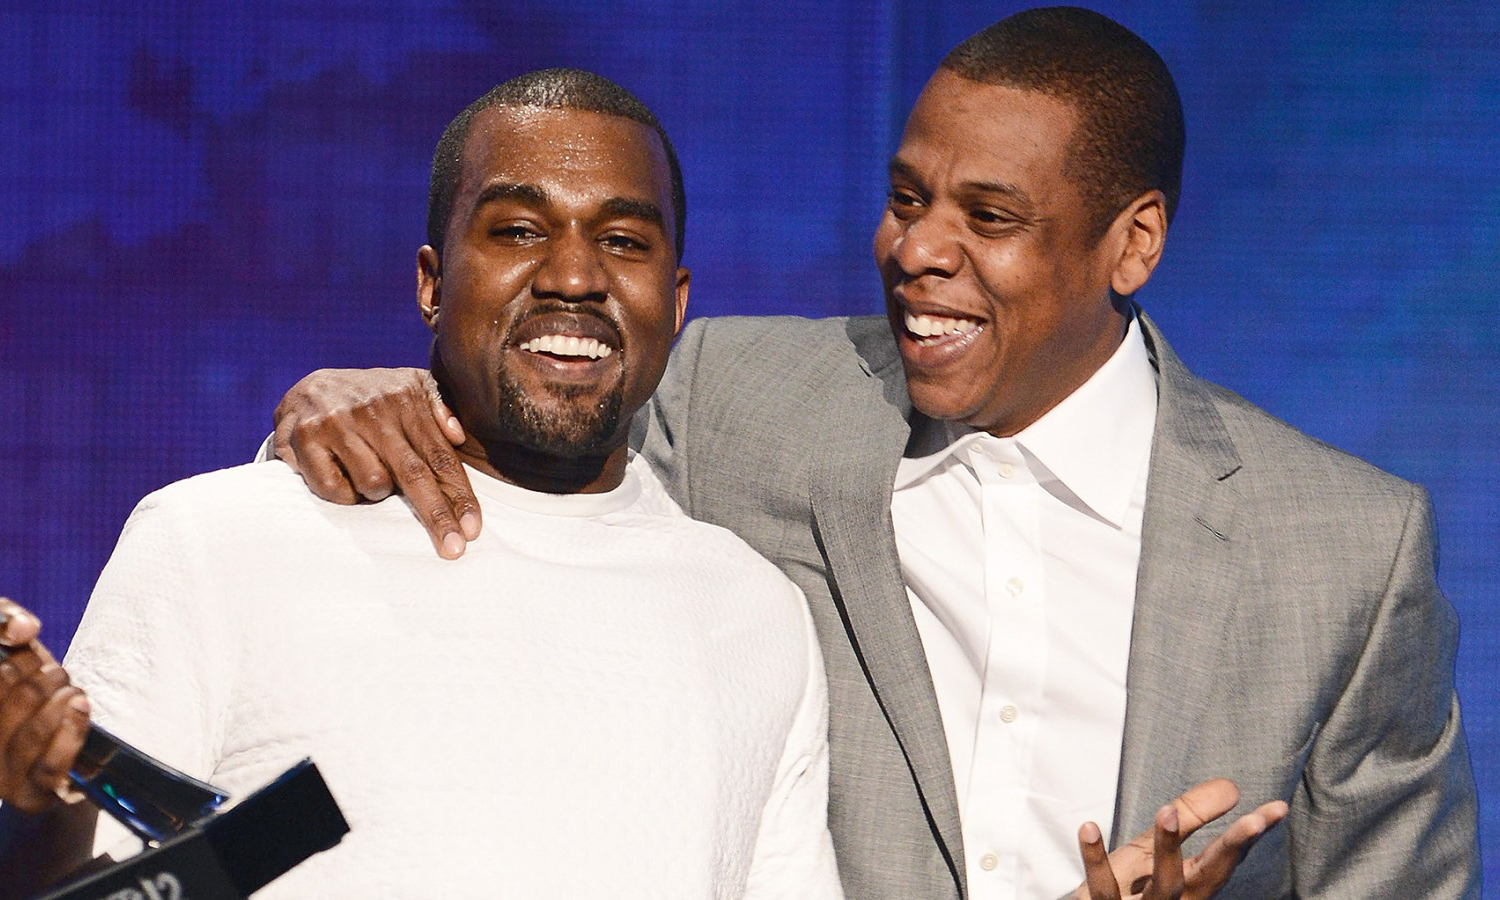 Jay-Z：“Kanye 就像我的弟弟，兄弟之间有矛盾很正常。”